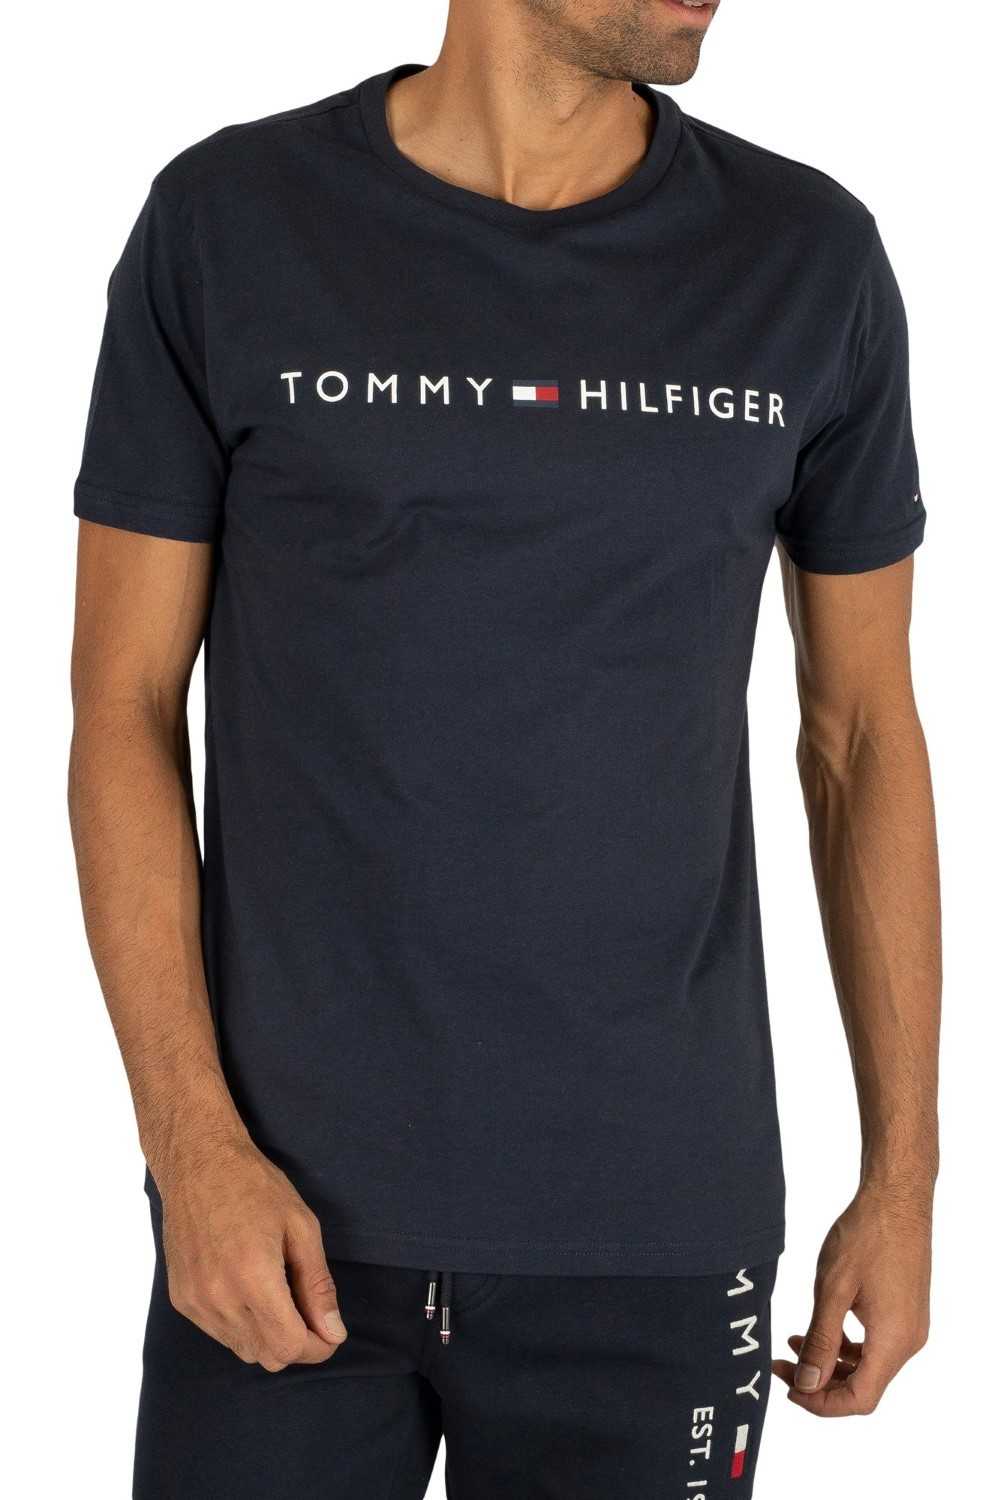 Camiseta Caballero Tommy Hilfiger   -   - PEPI GUERRA